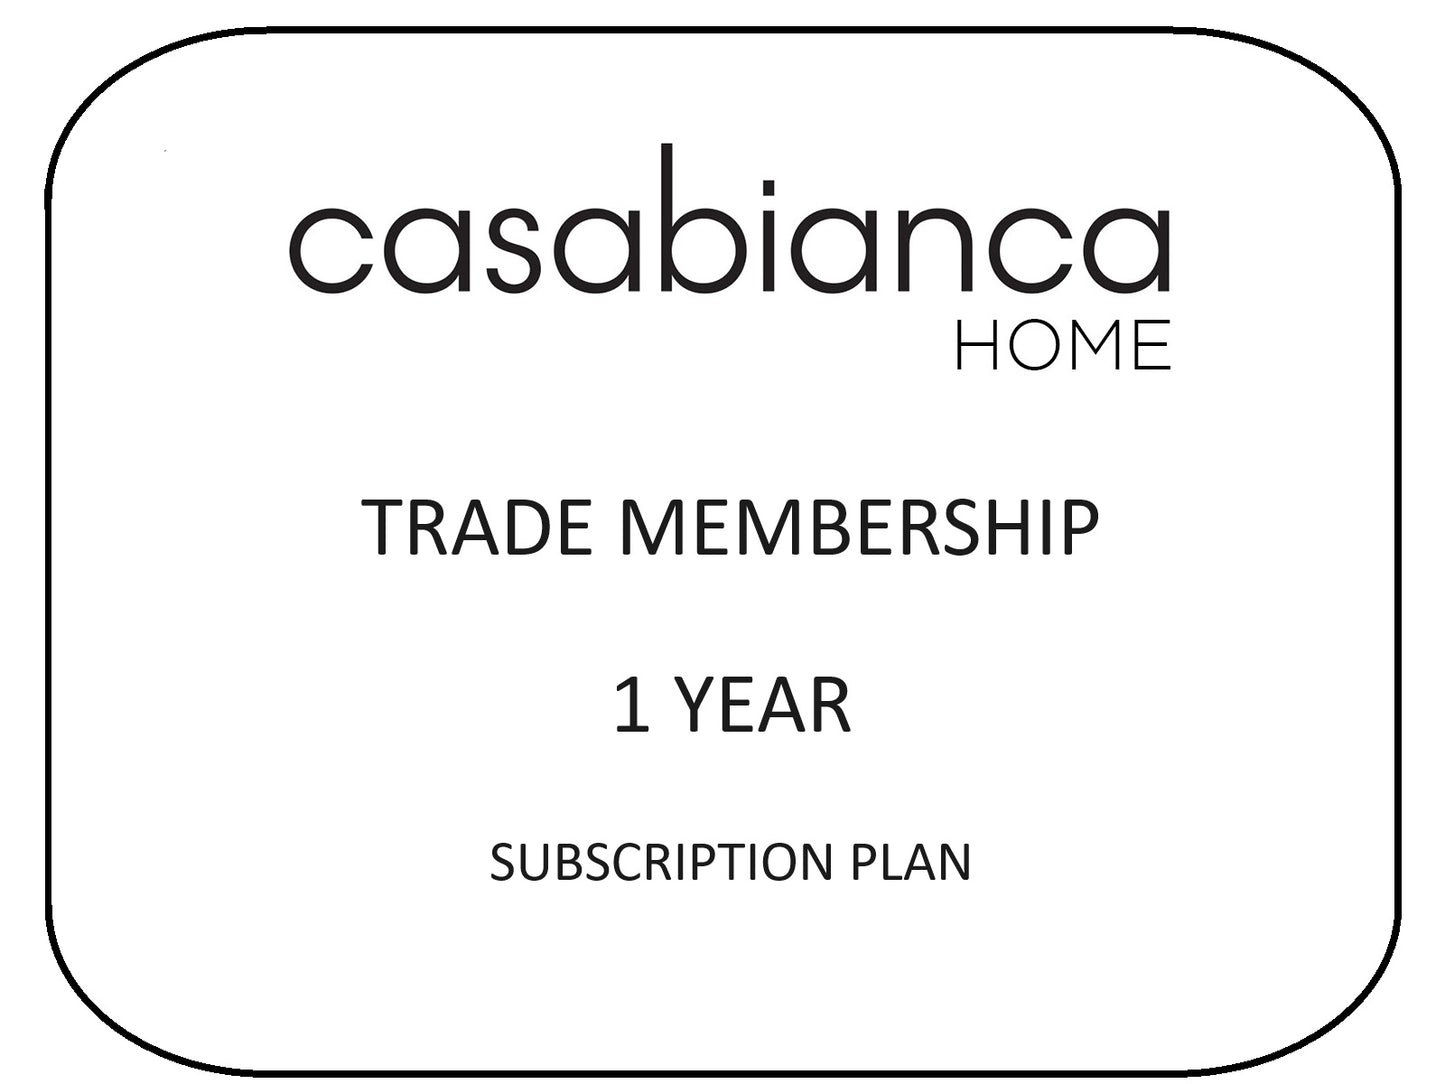 Casabianca Home Trade Membership